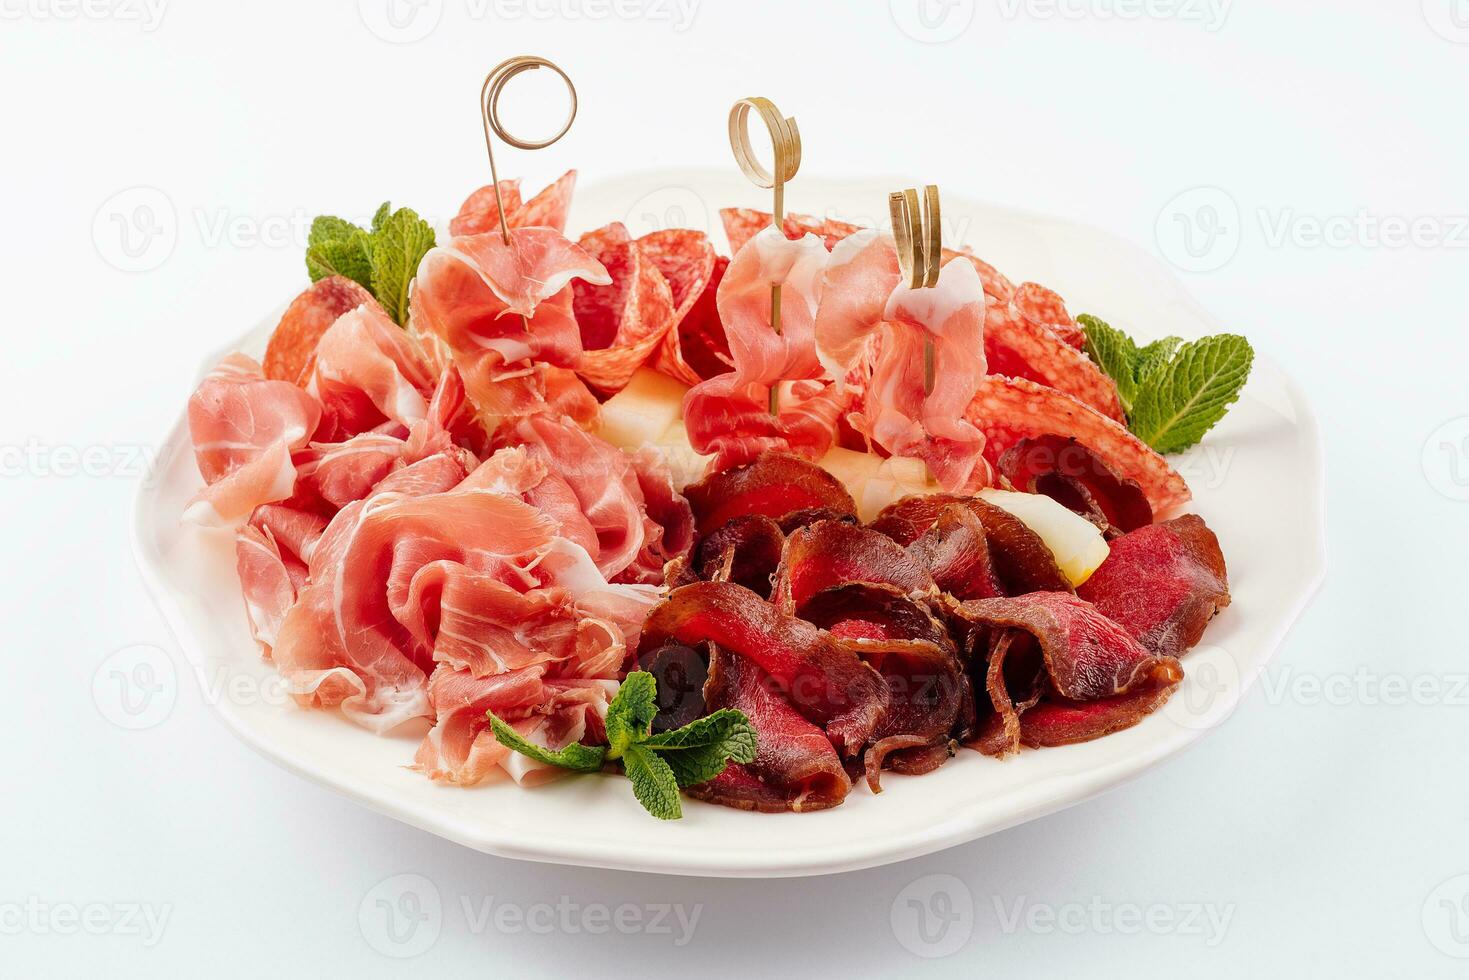 geassorteerd deli vlees - ham, worst, salami, parma, prosciutto foto